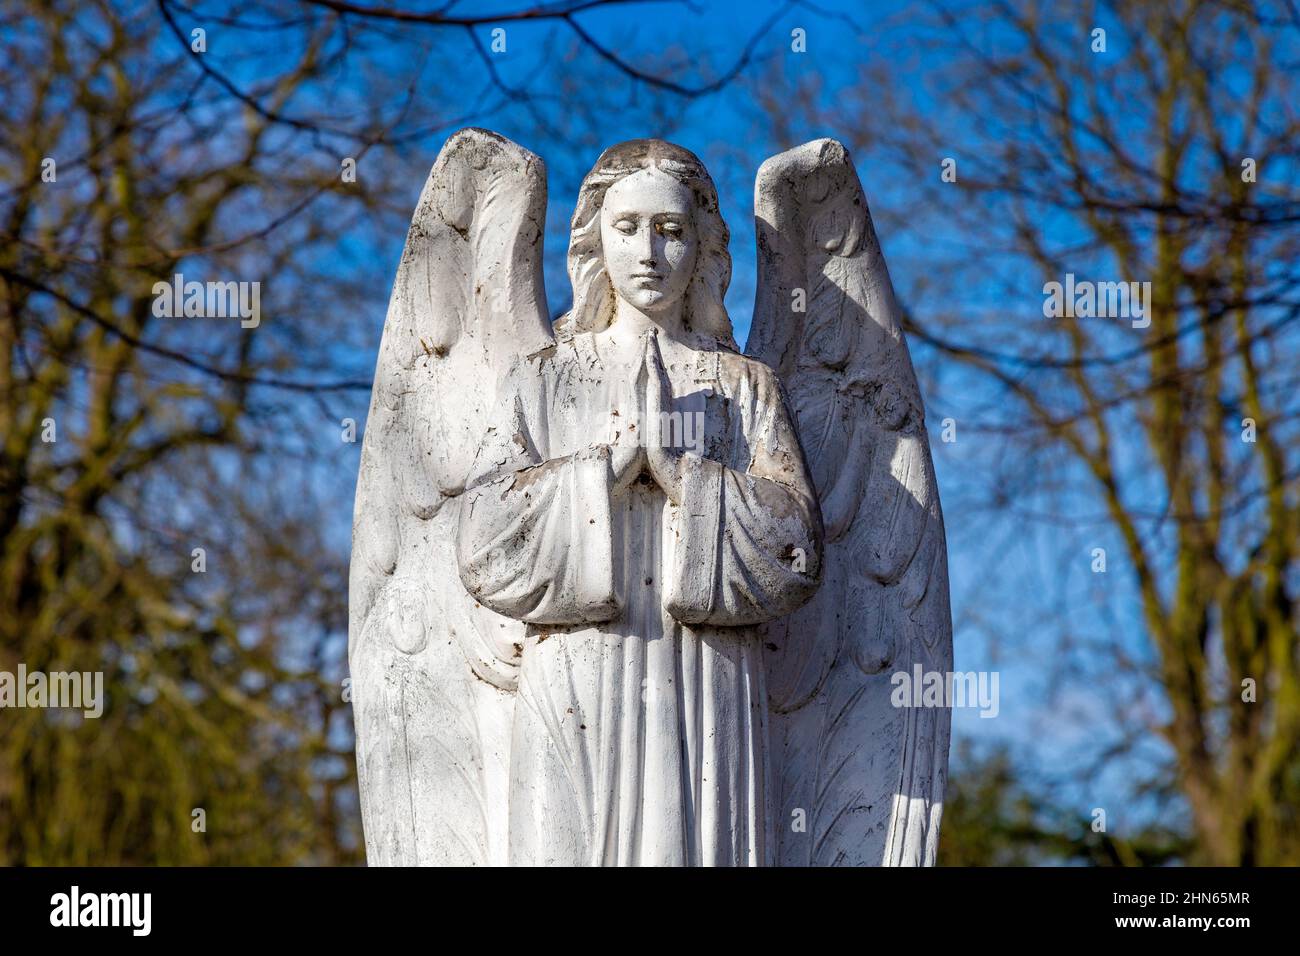 Funerary statue of praying angel at City of London Cemetery and Crematorium, Manor Park, Newham, London, UK Stock Photo